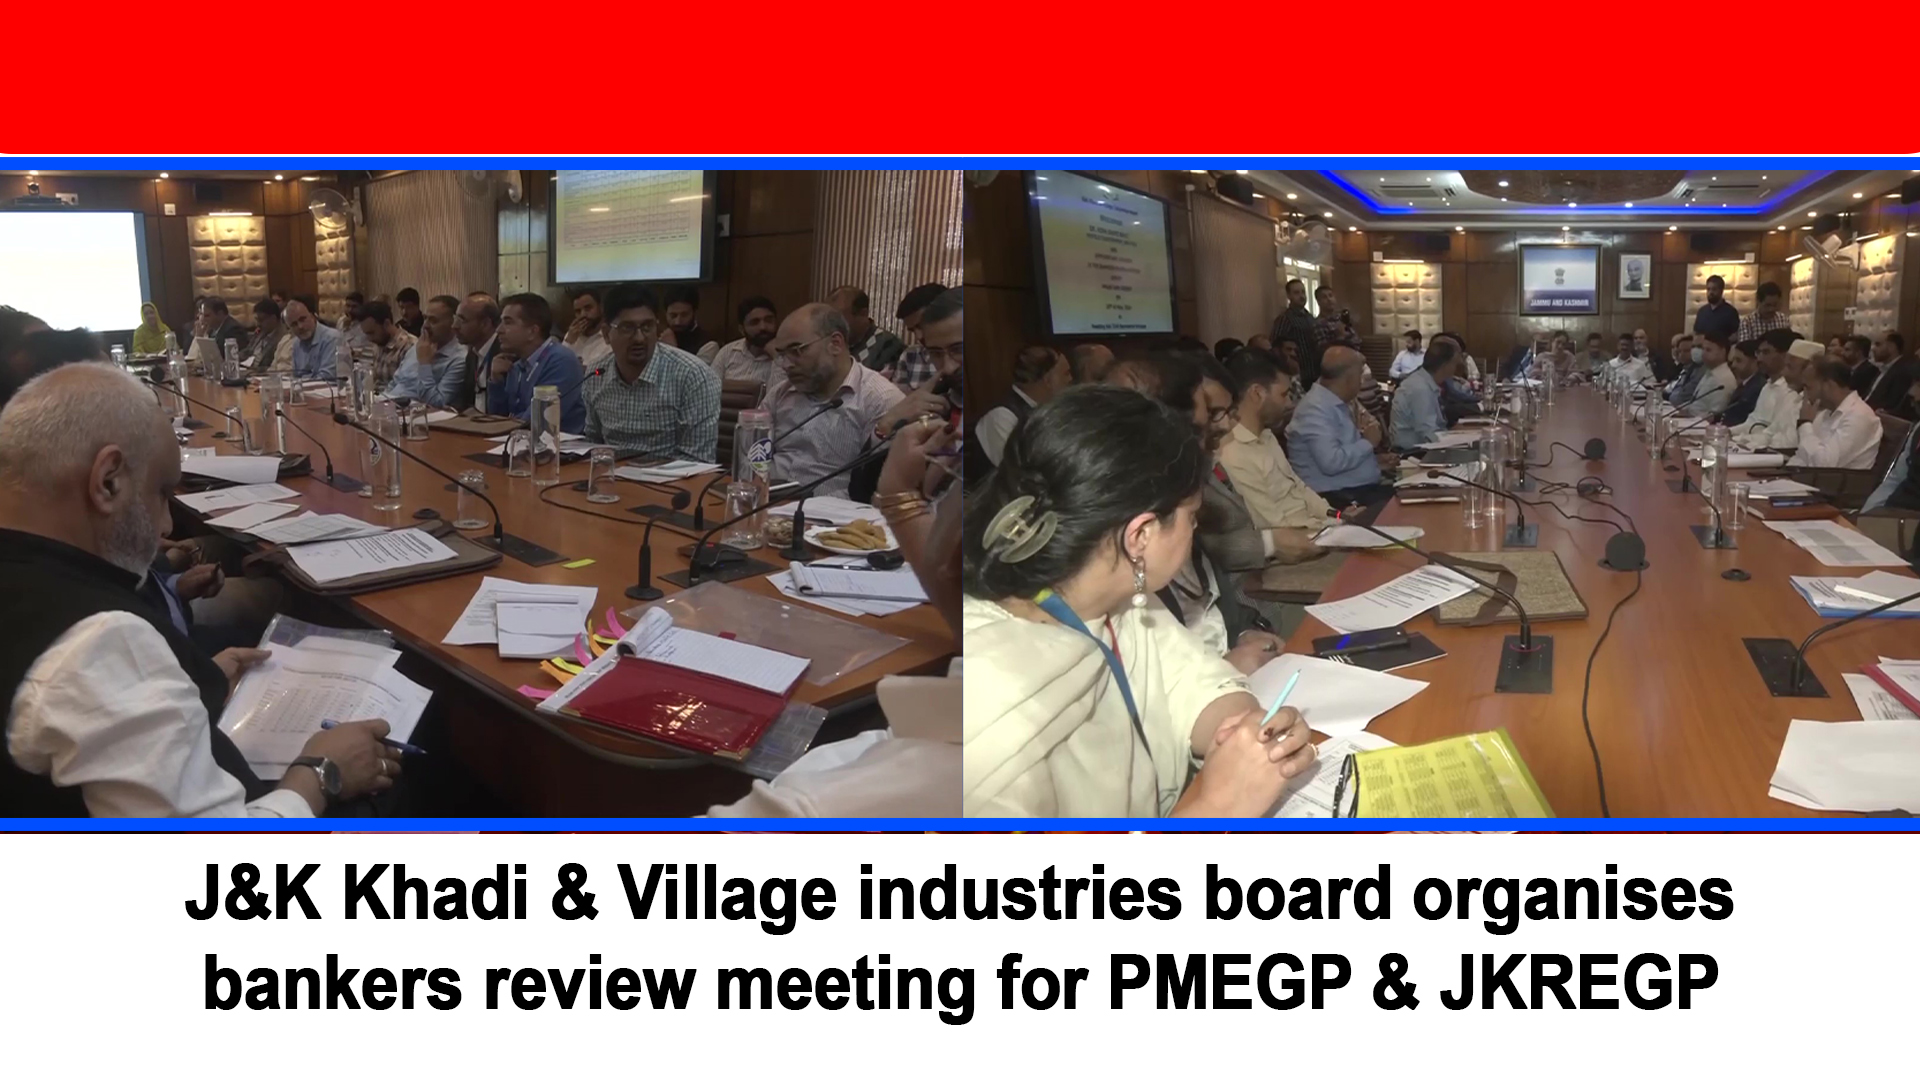 J&K Khadi & Village industries board organises bankers review meeting for PMEGP & JKREGP schemes